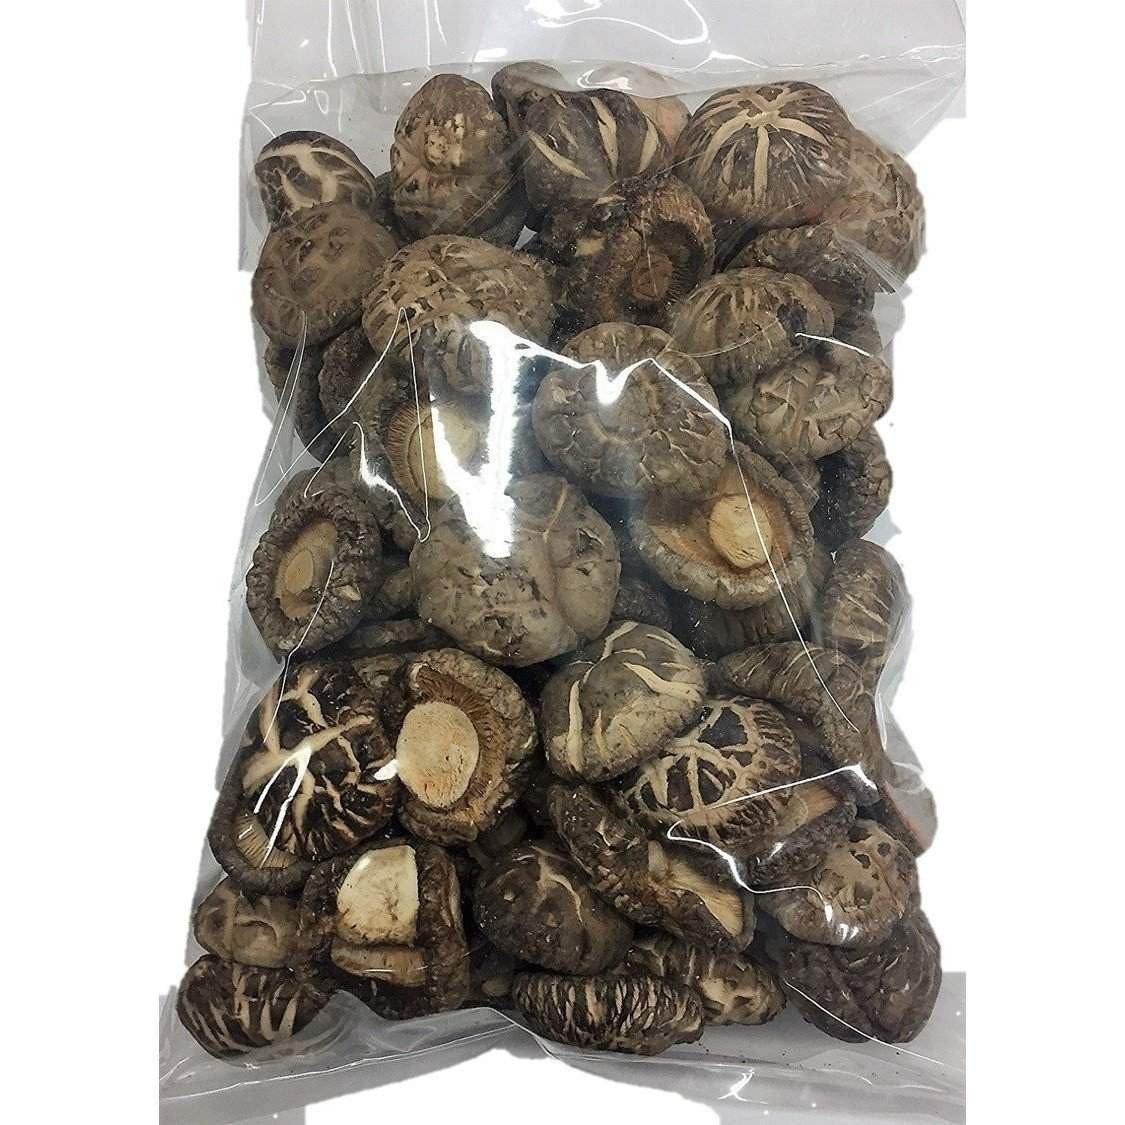 Herbsgreen Premium Grade Dried Shiitake Mushrooms Extra Thick (1 LB.) - Buy at New Green Nutrition